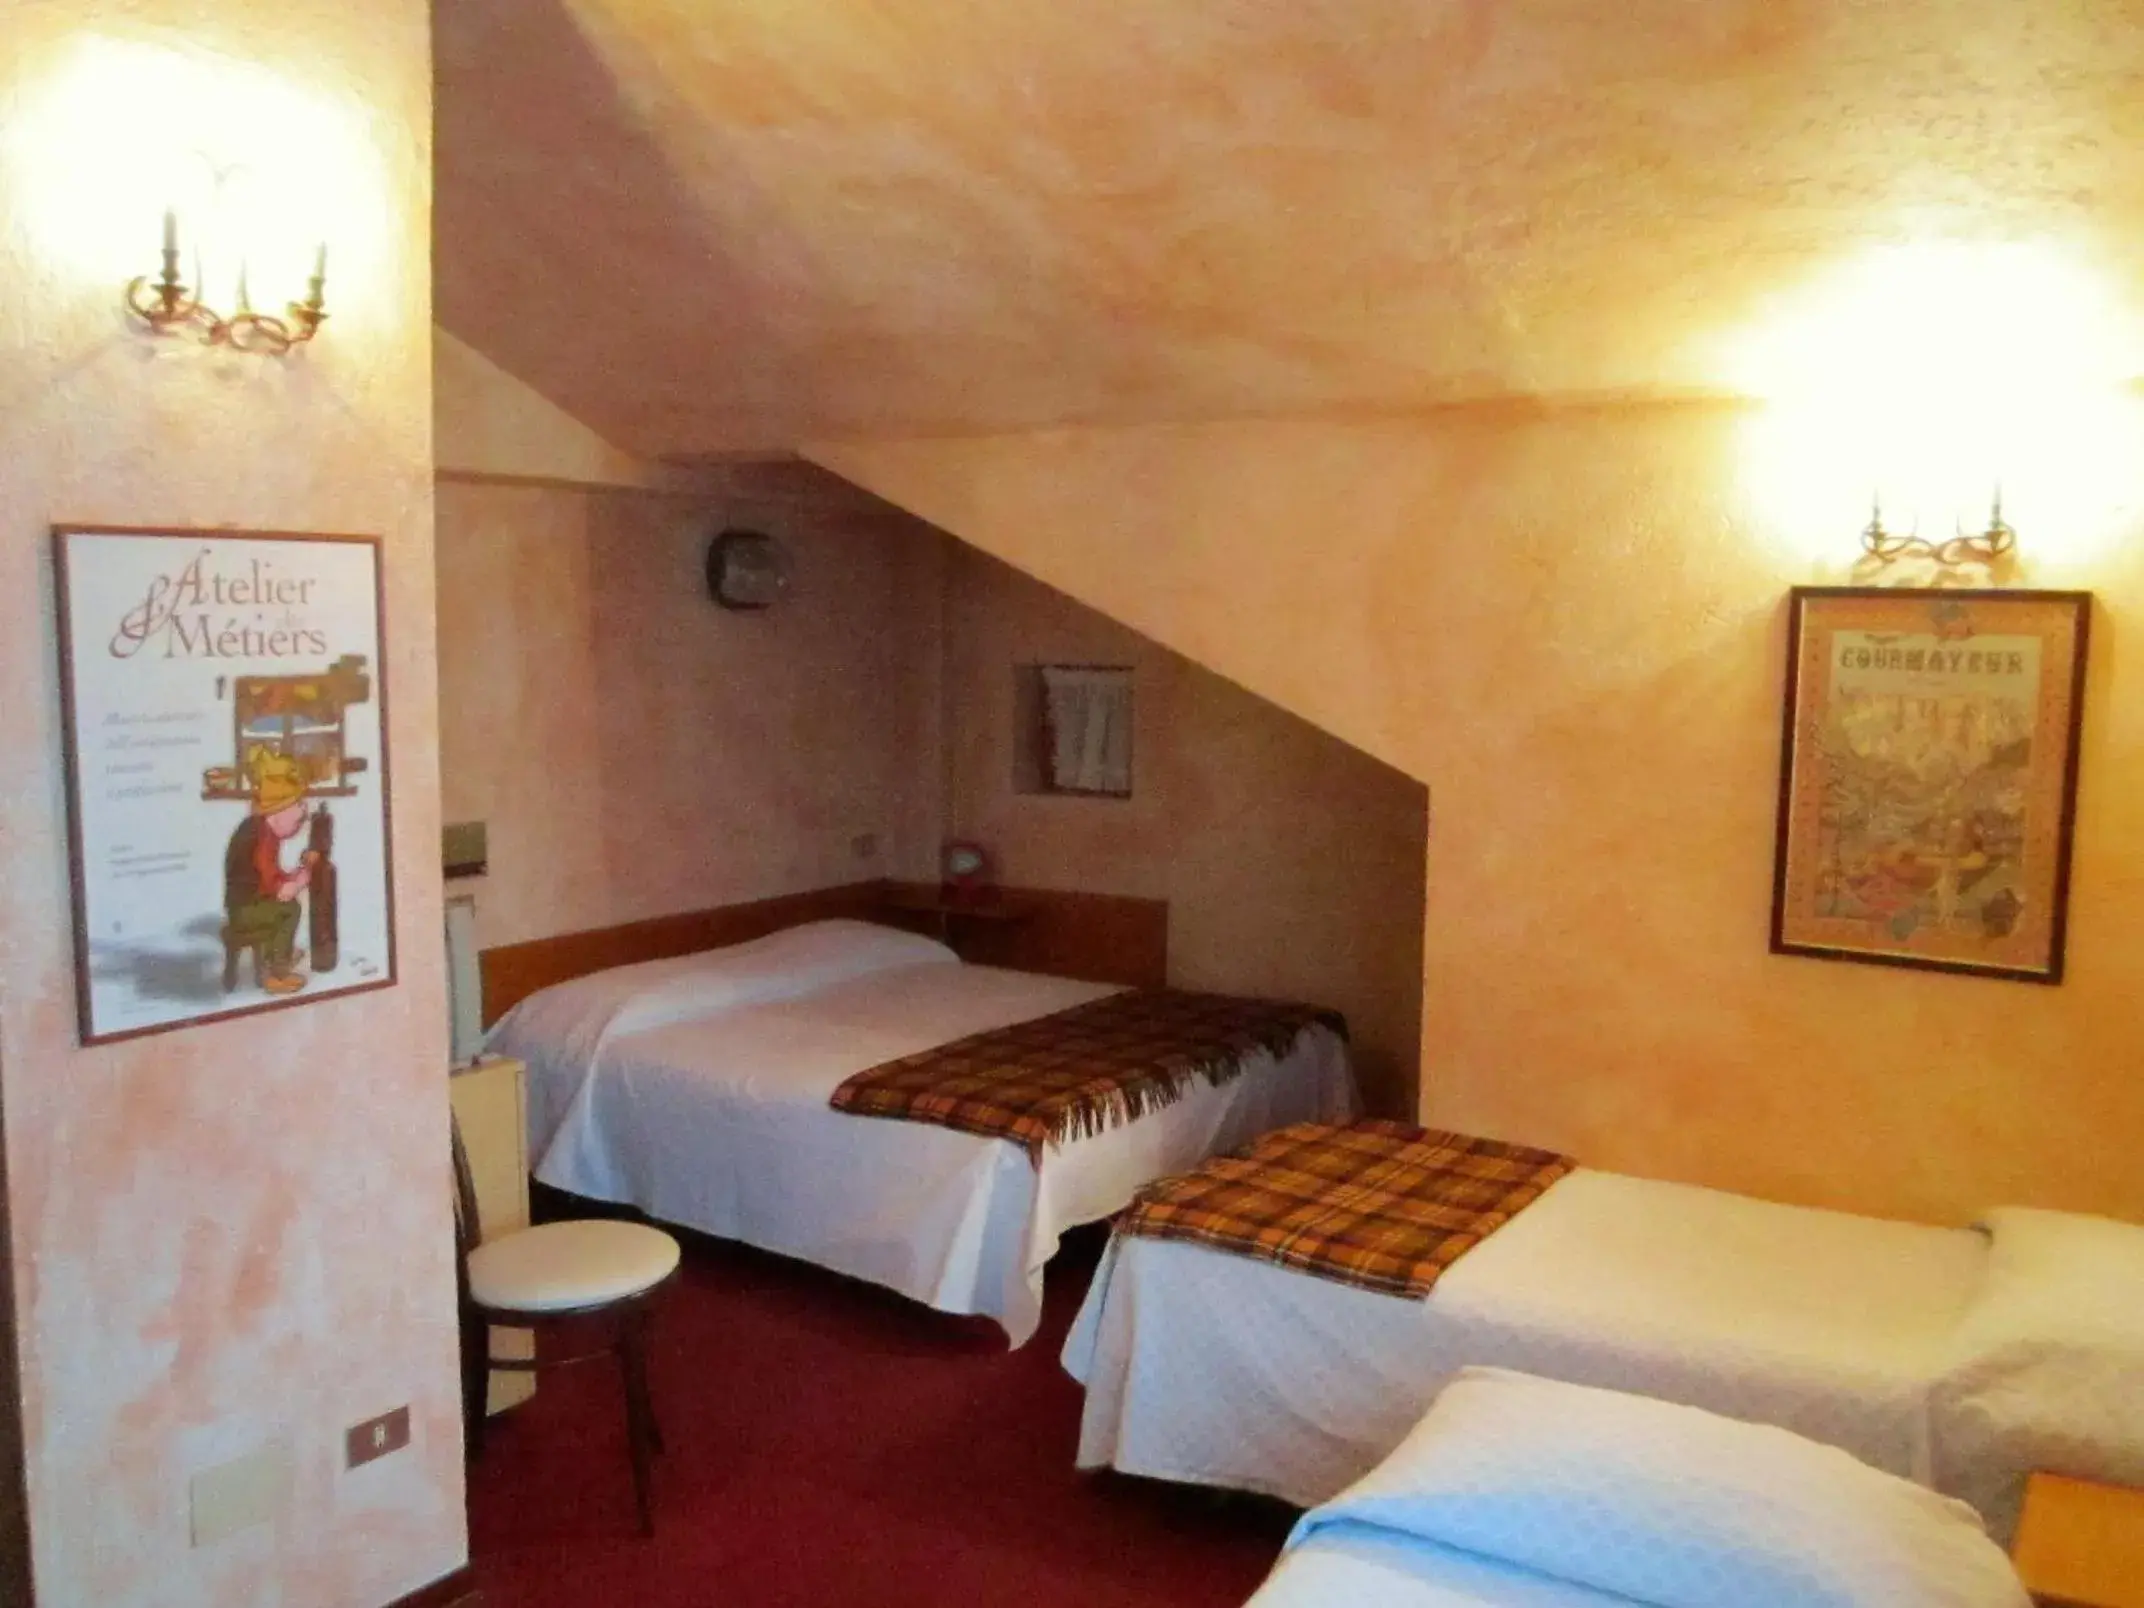 Bed, Room Photo in Hotel Del Viale